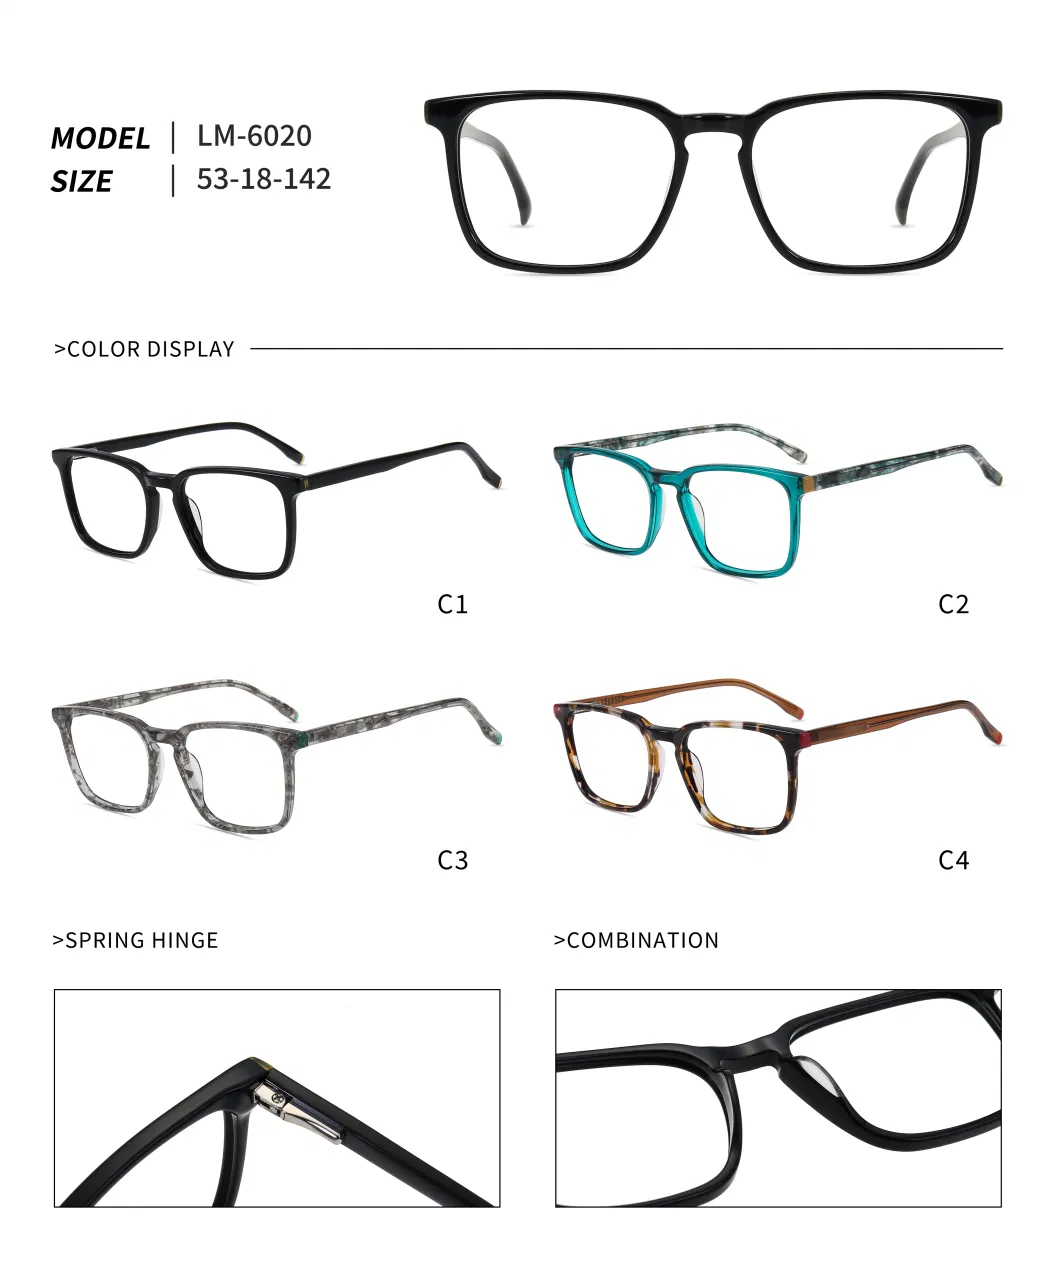 Fashion and Colorful Acetate Eyewear Optical Reading Glasses